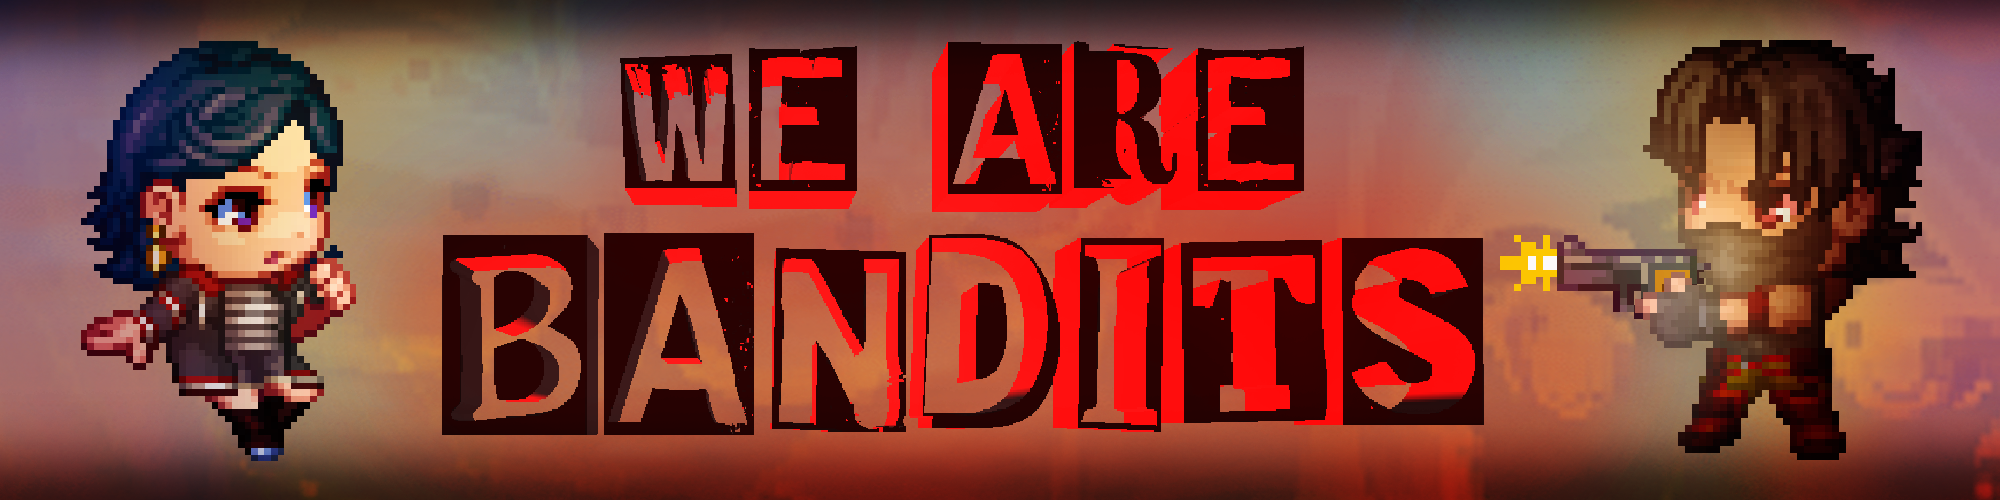 We Are Bandits! (Act 1)